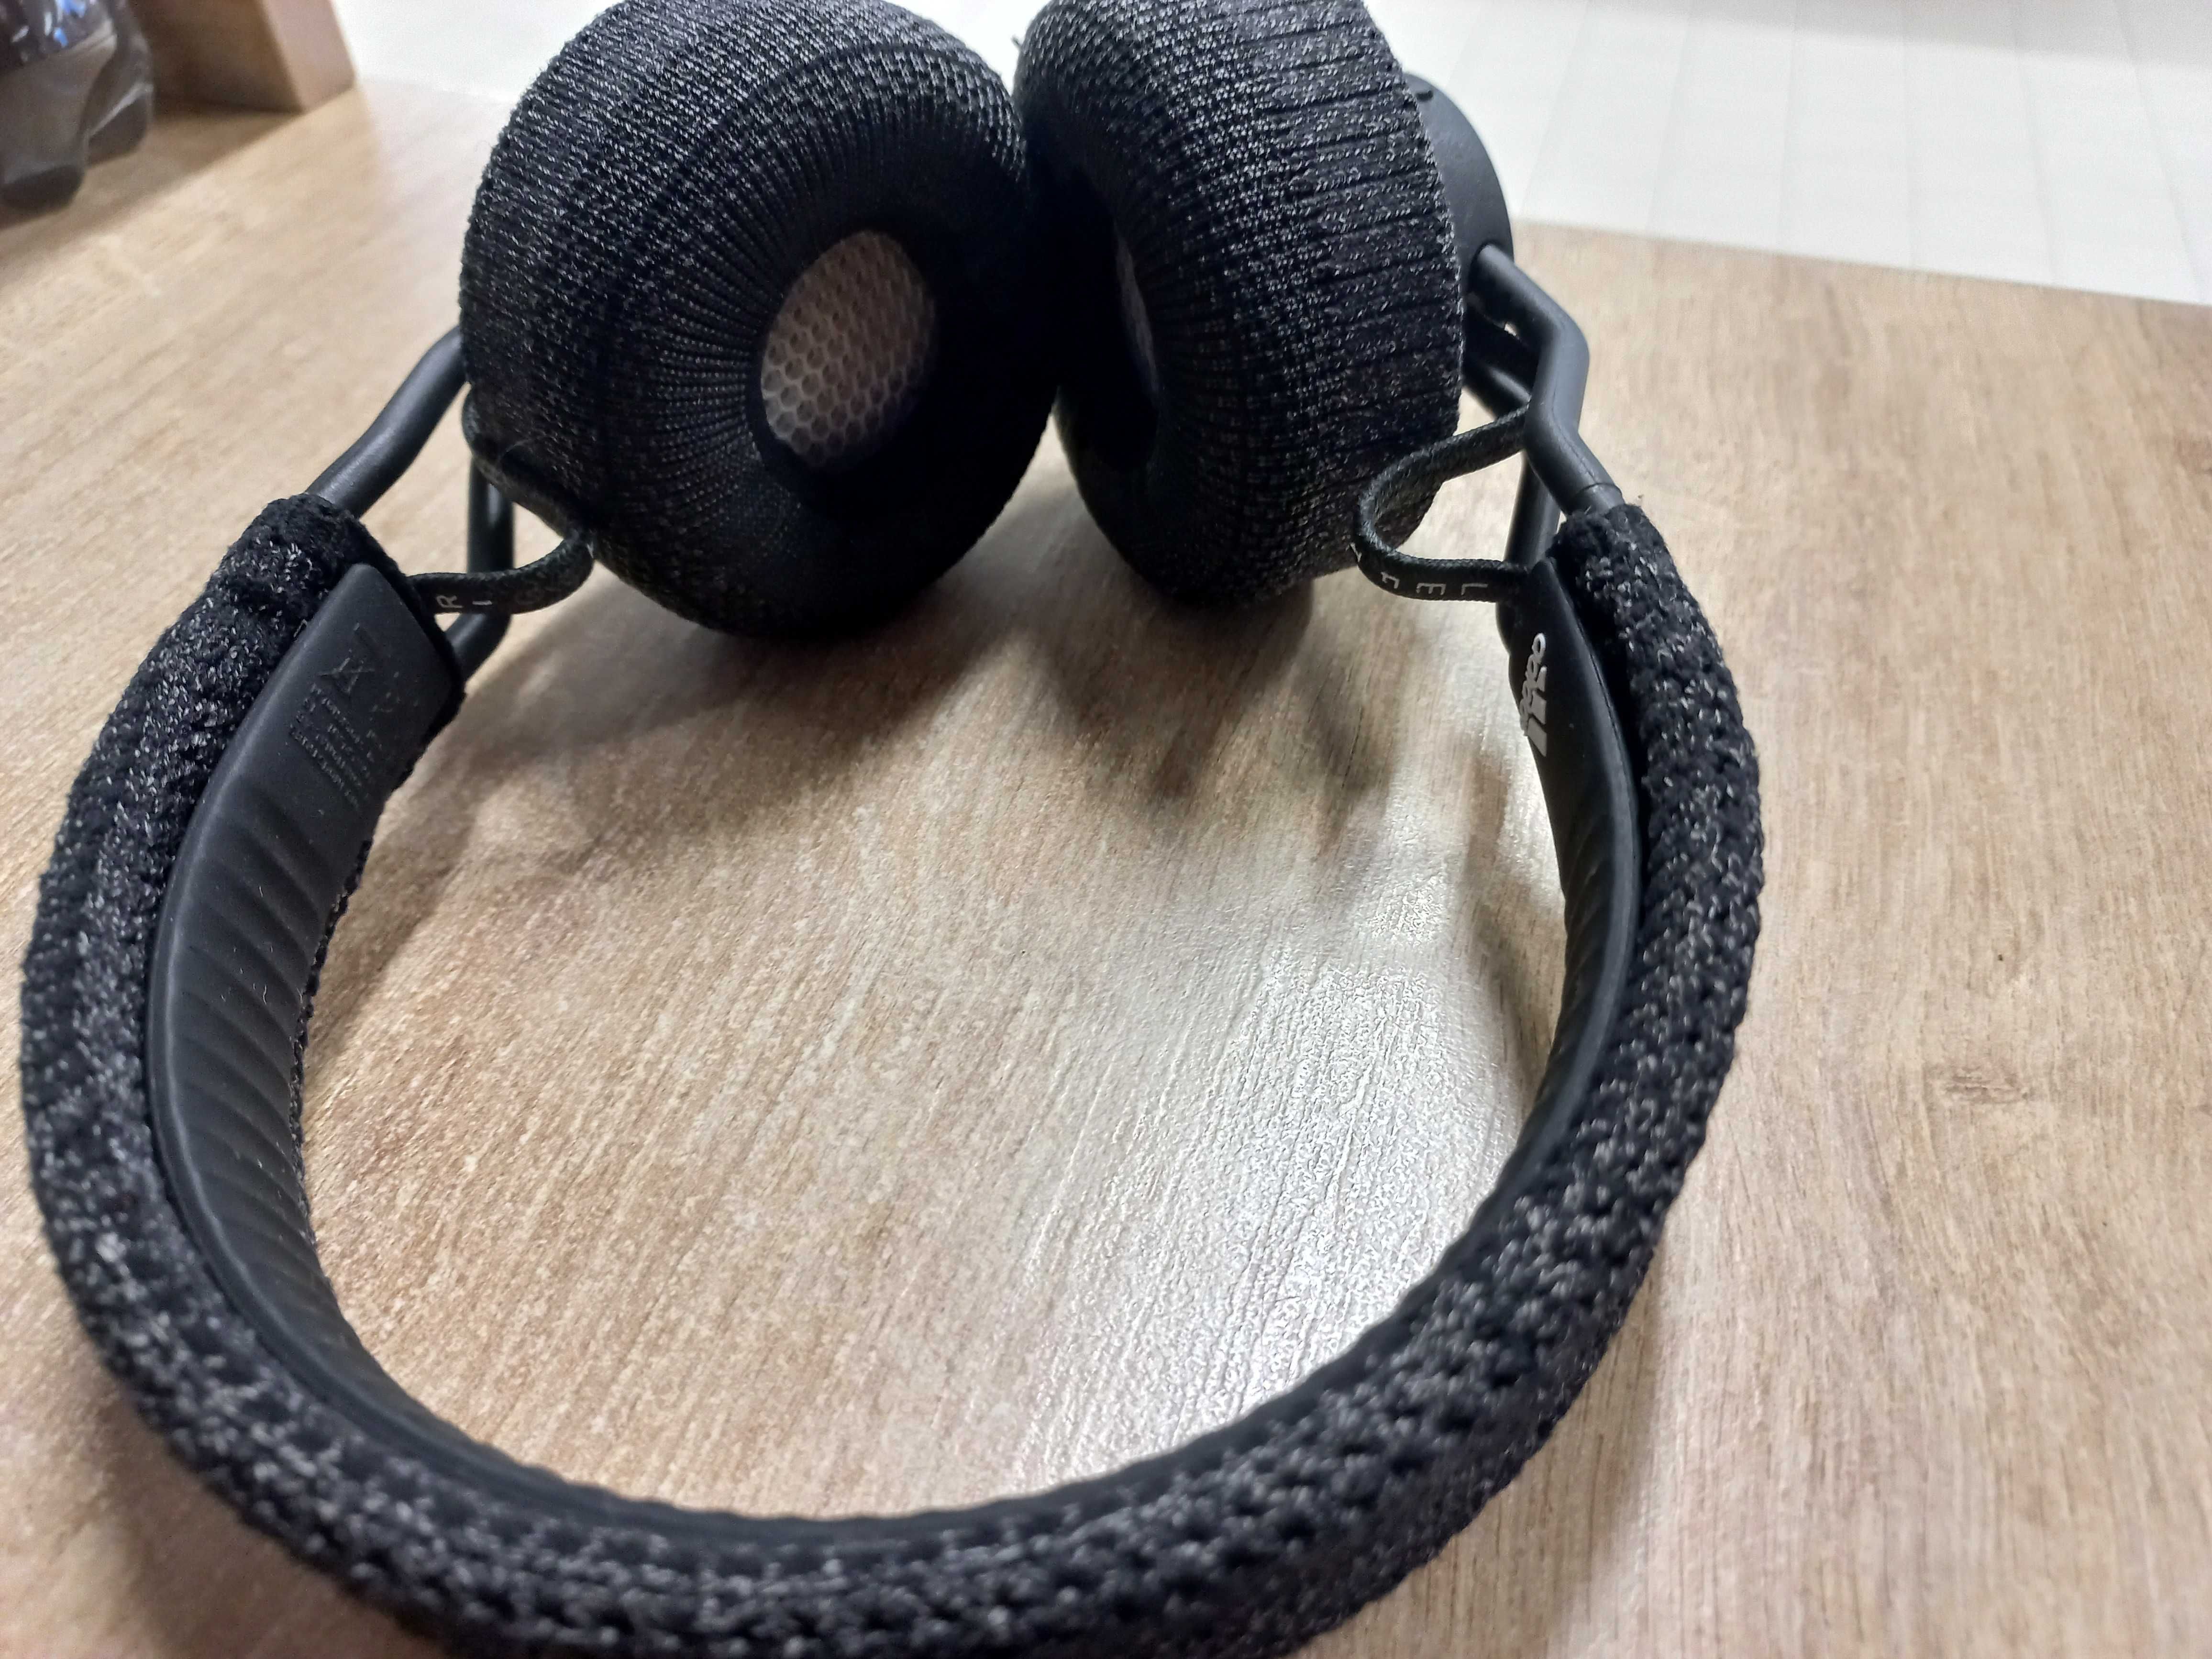 Casti Bluetooth On Ear Adidas model RPT-01 Black